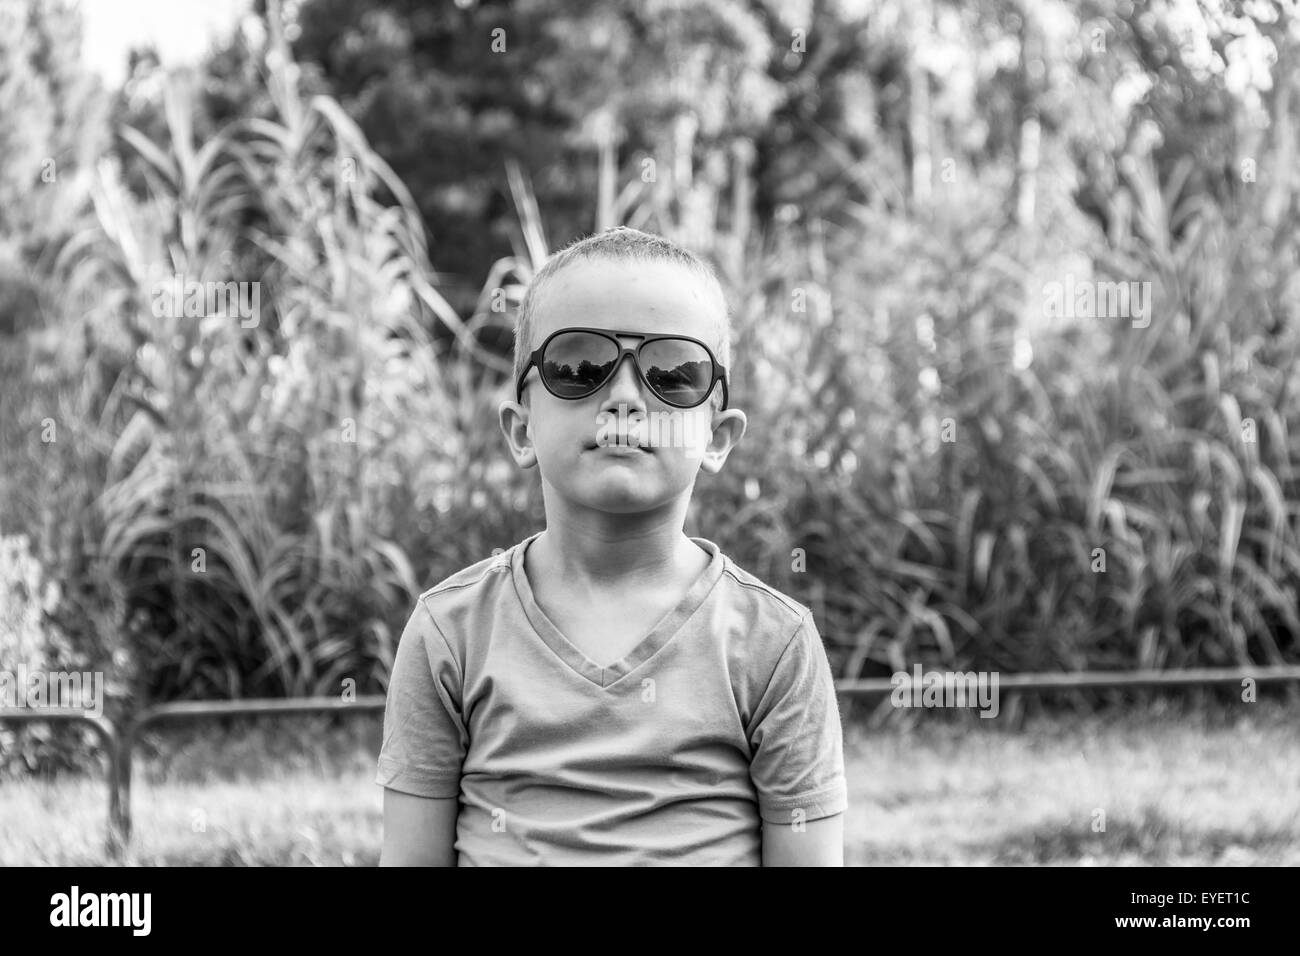 Short Hair Cute Boy Wearing Sunglasses B W Photo Stock Photo